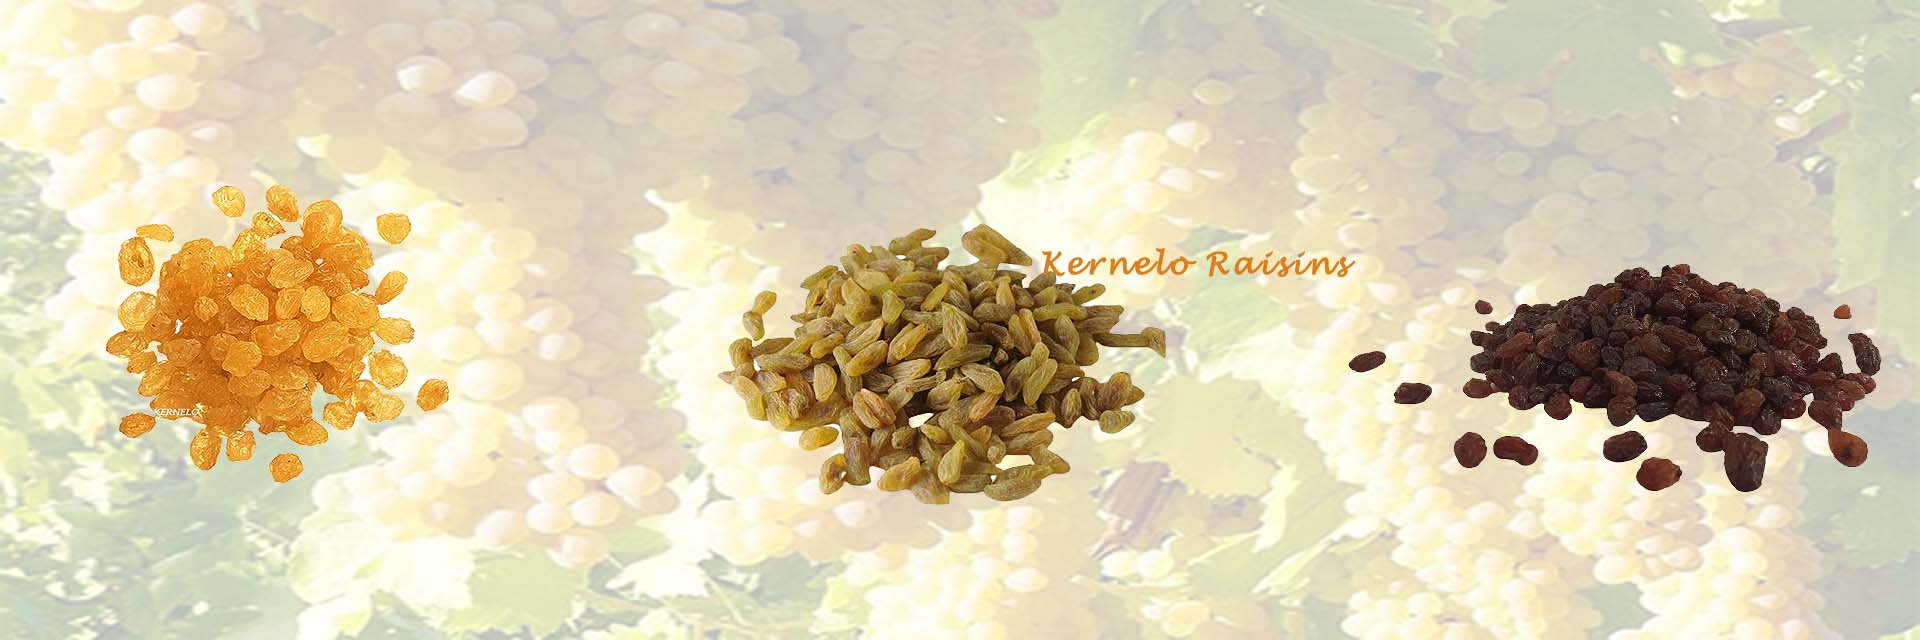 kernelo raisins supplier canada golden sultana